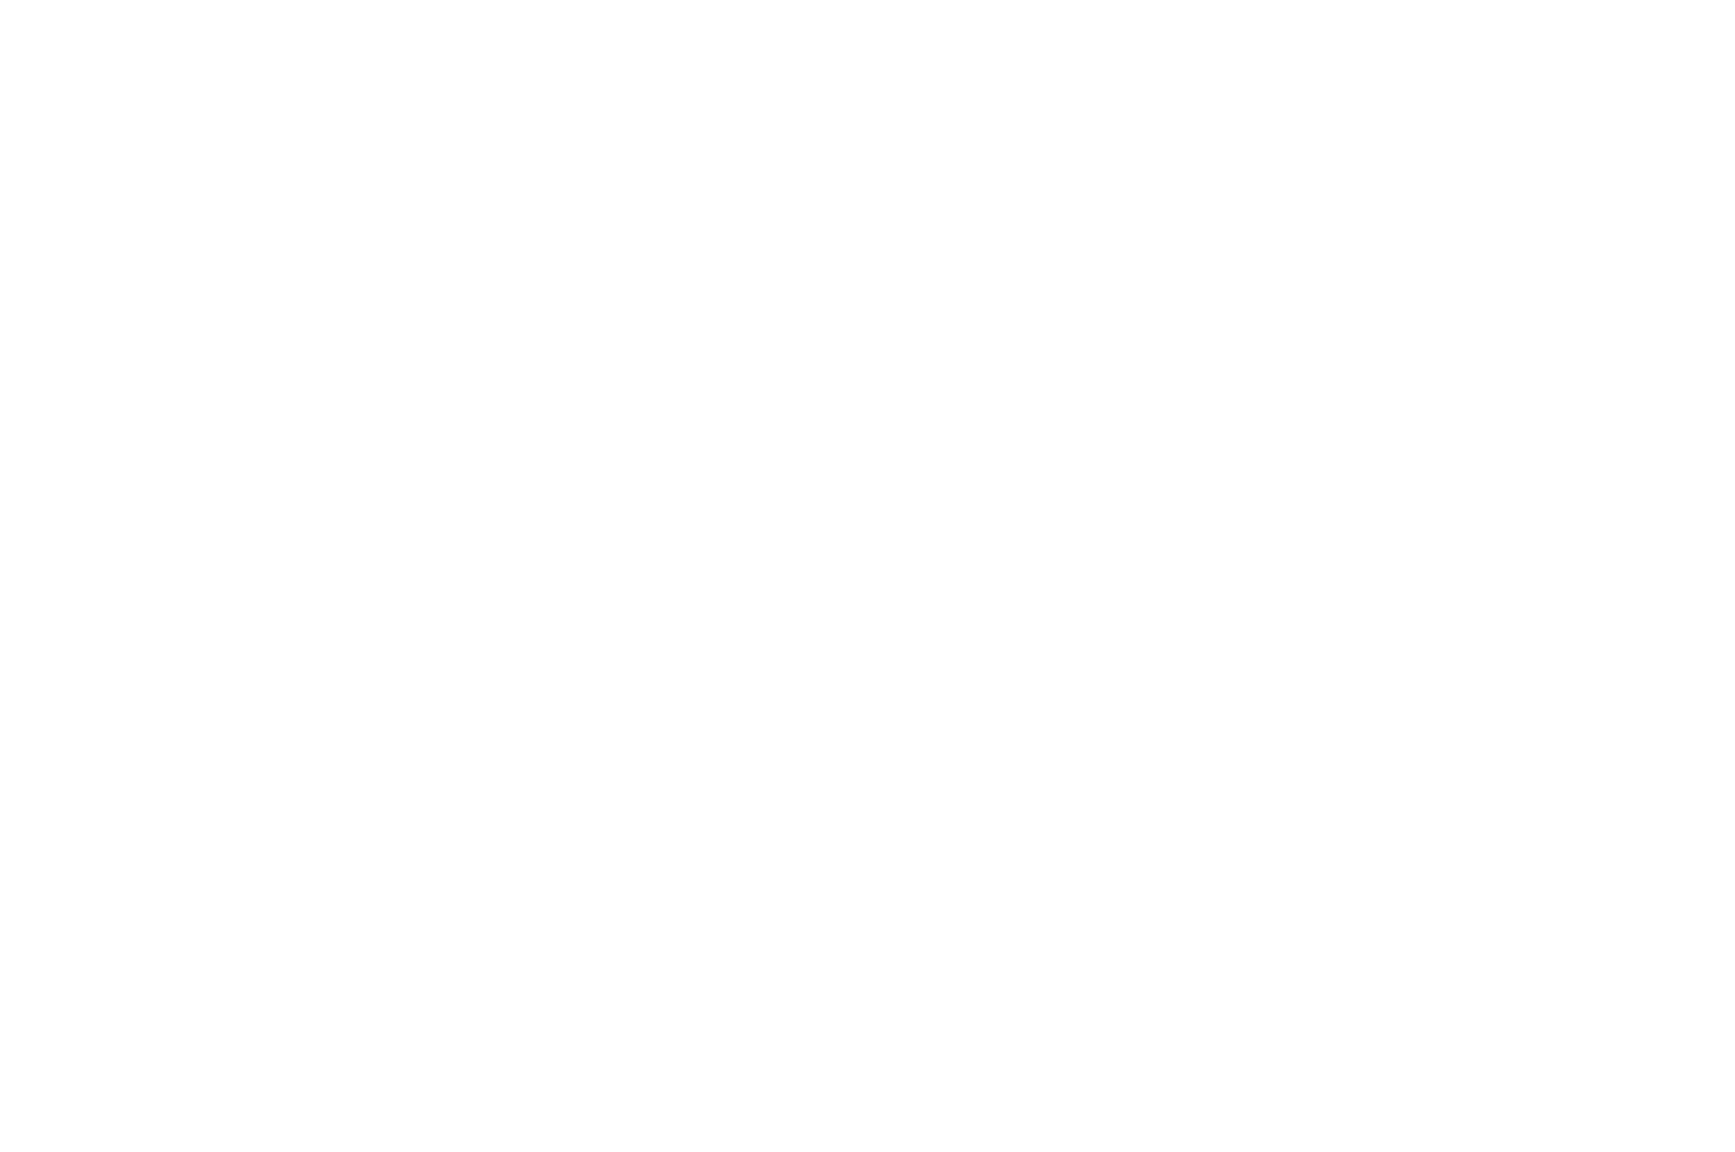 Canadian Cinema Editors Awards laurel